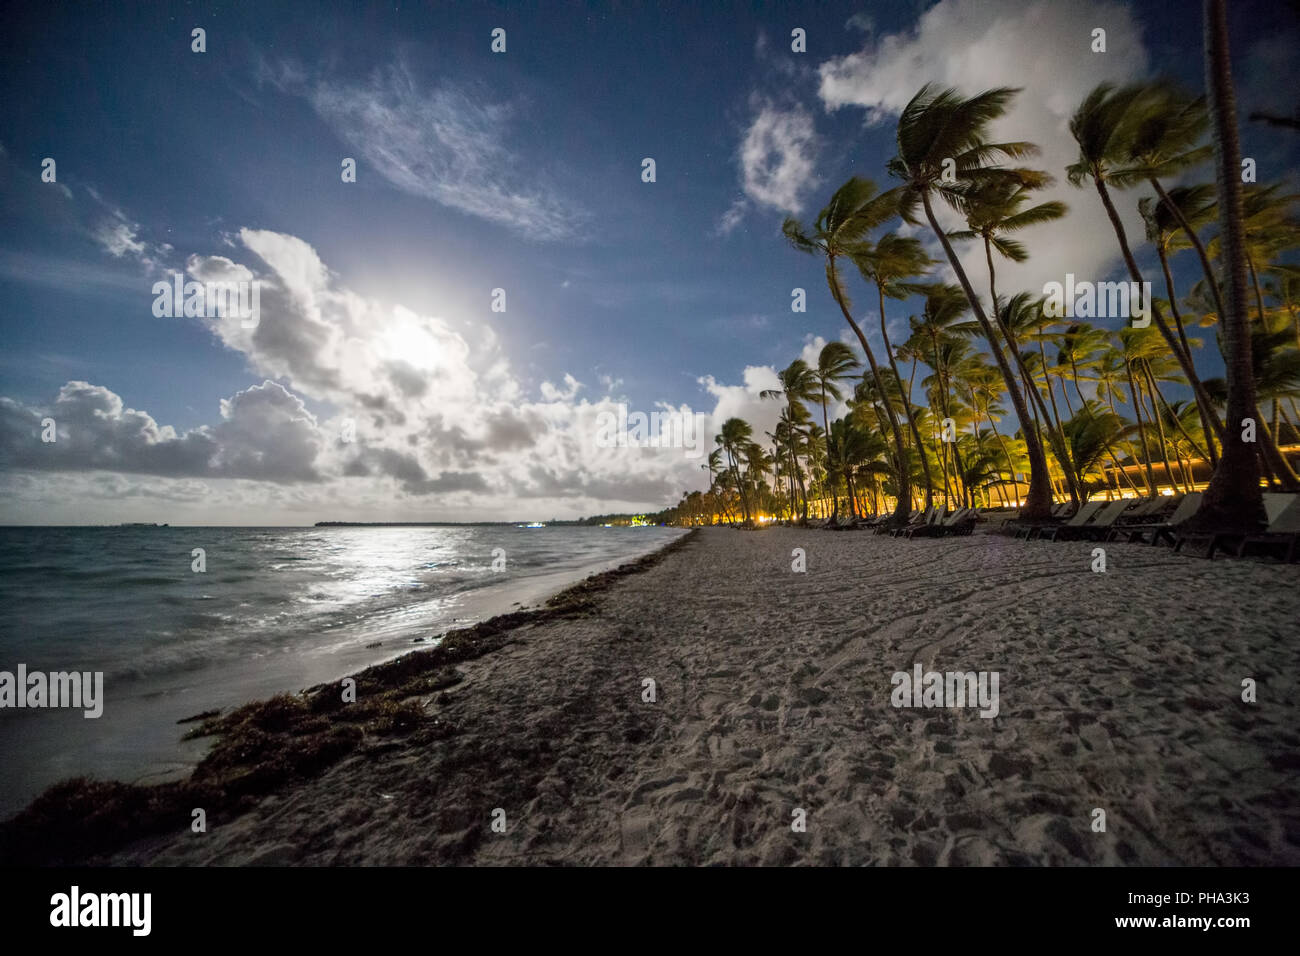 Caribbean Beach at night Stock Photo